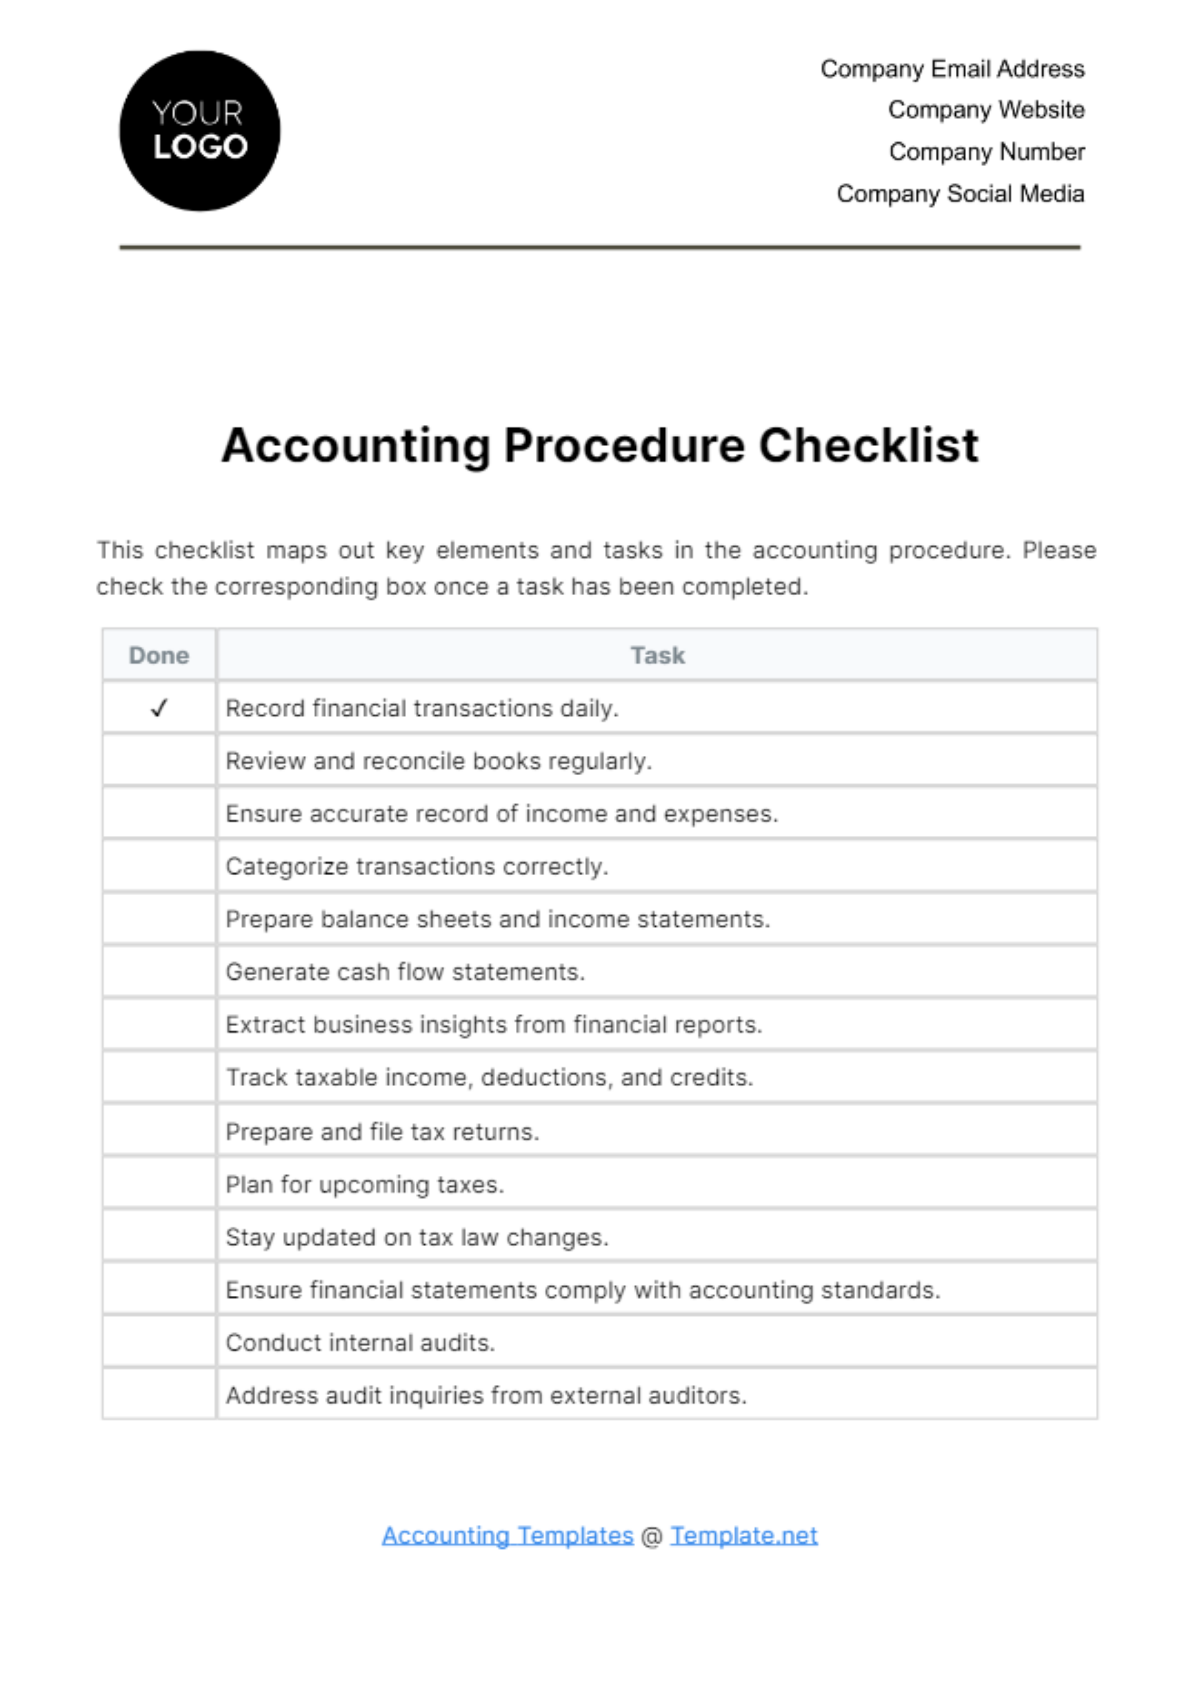 Accounting Procedure Checklist Template